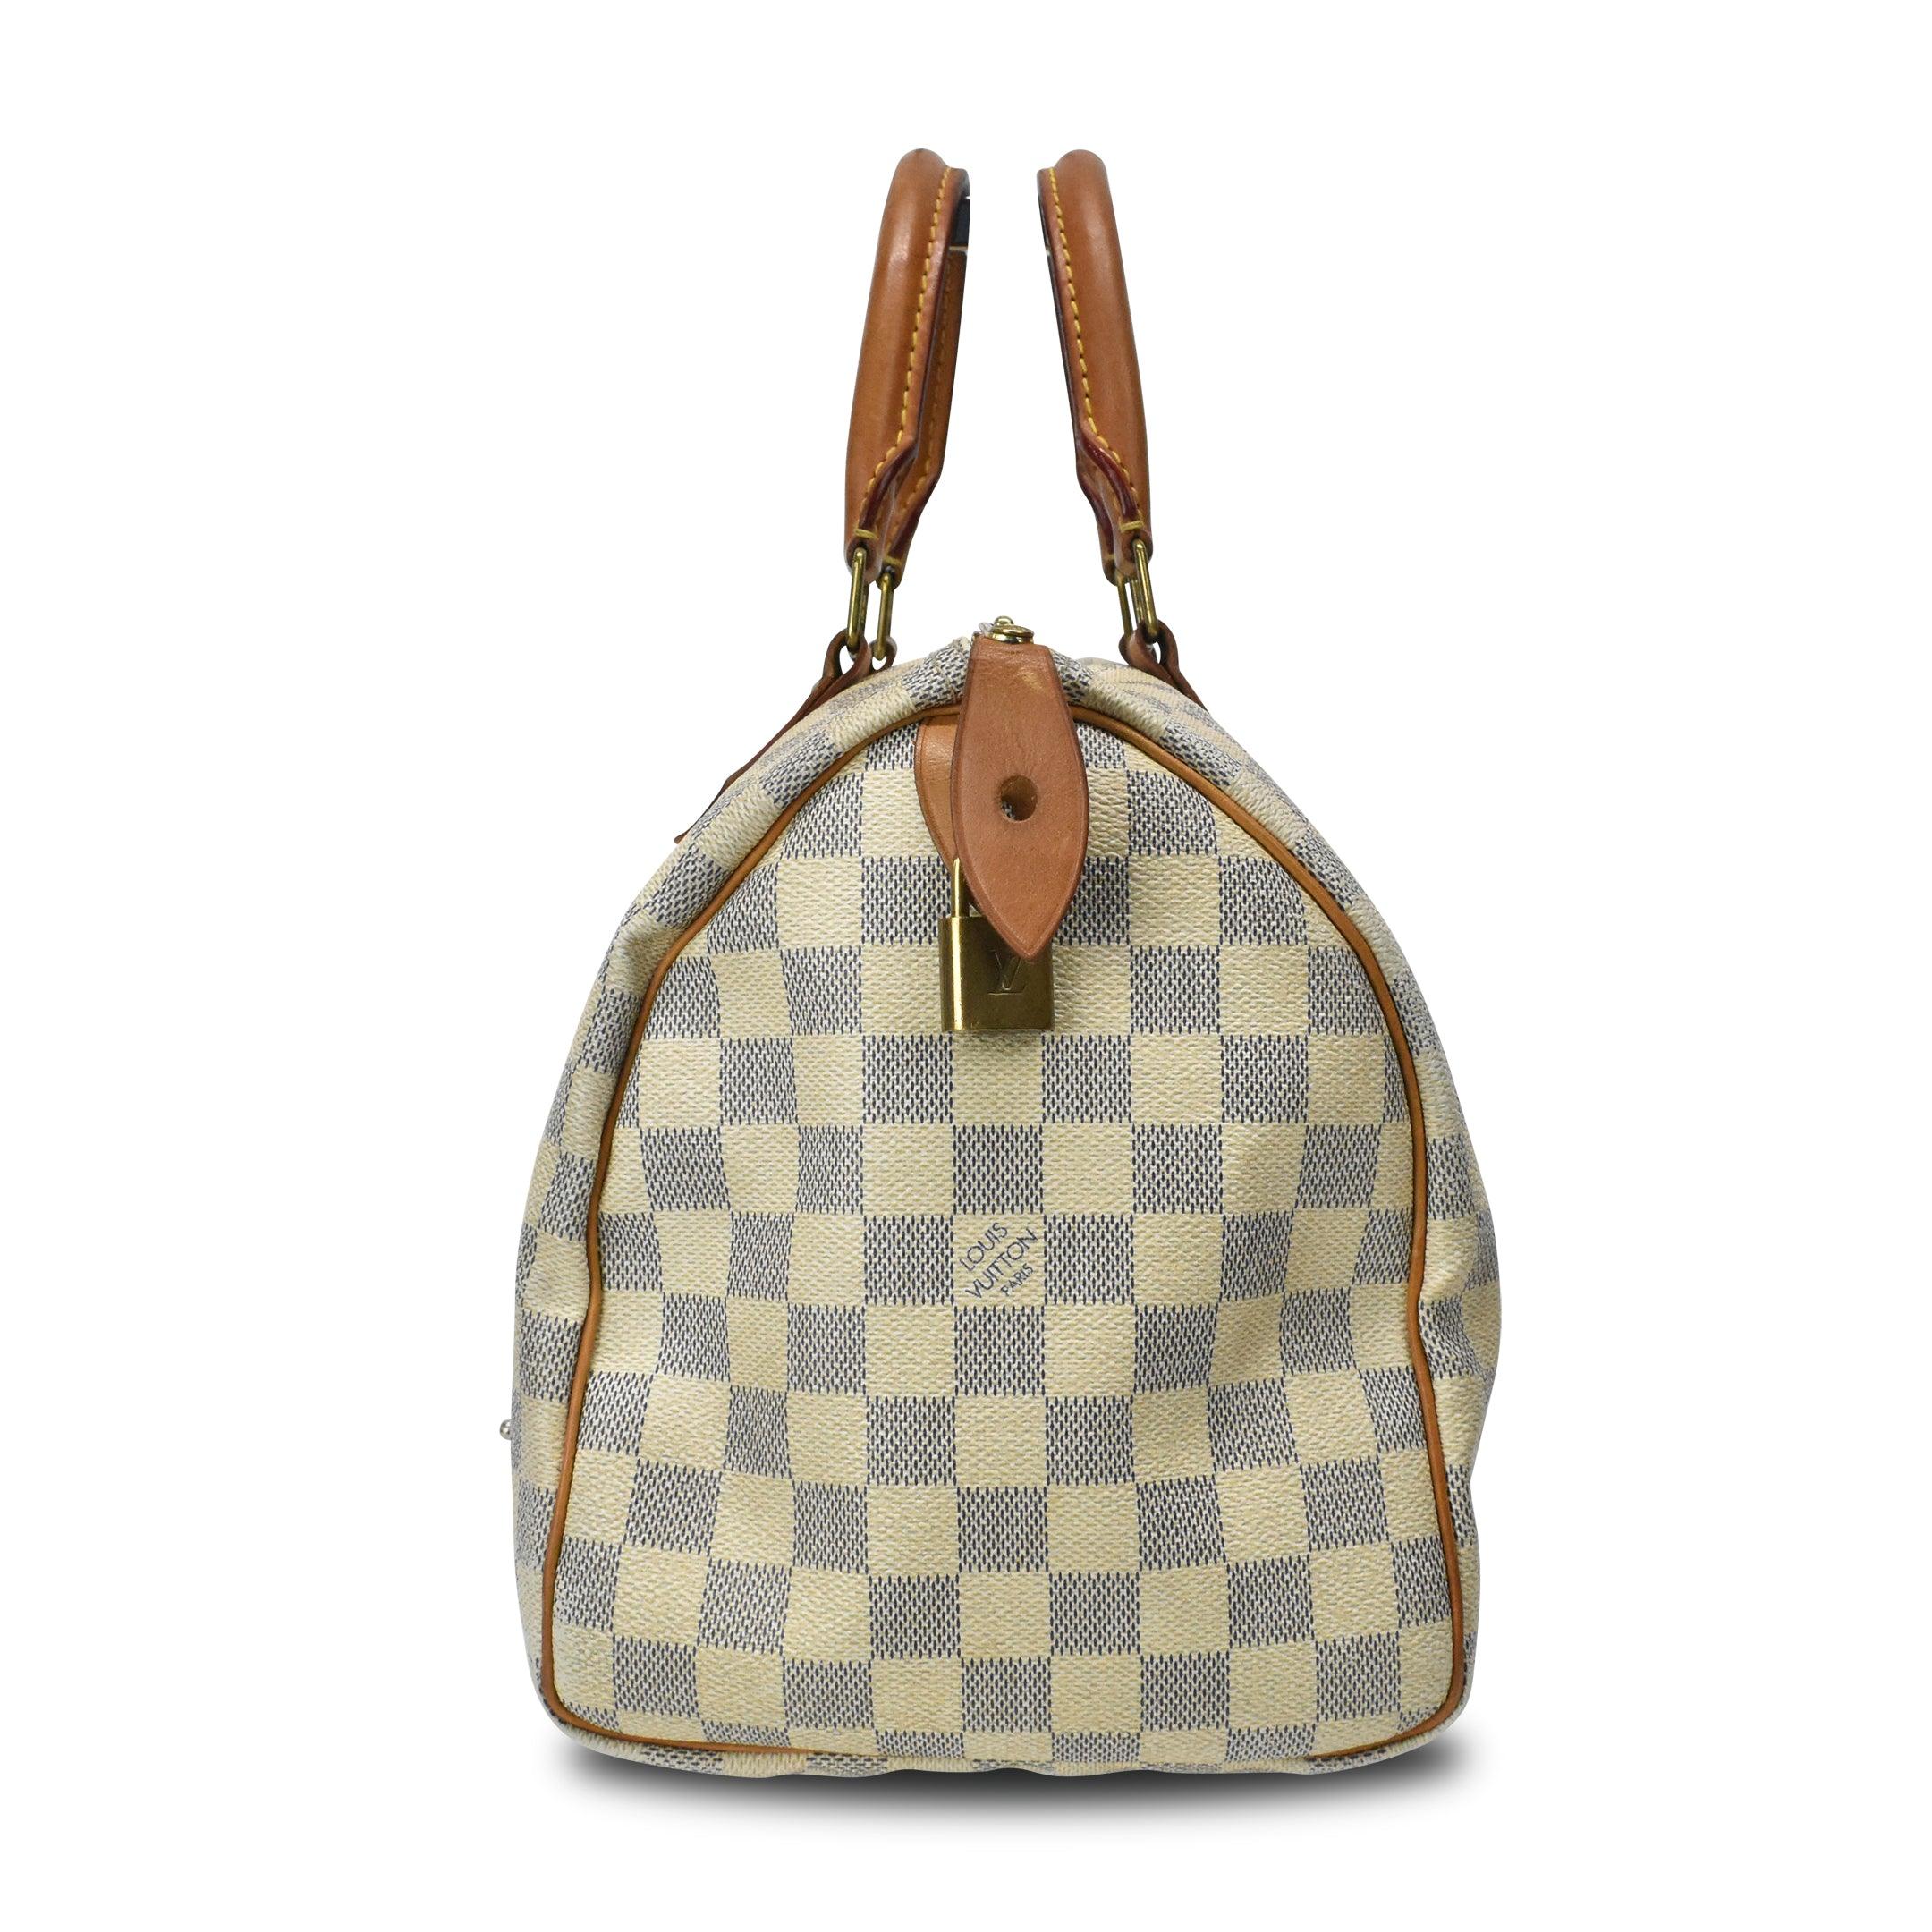 Louis Vuitton 'Speedy 30' Handbag - Fashionably Yours